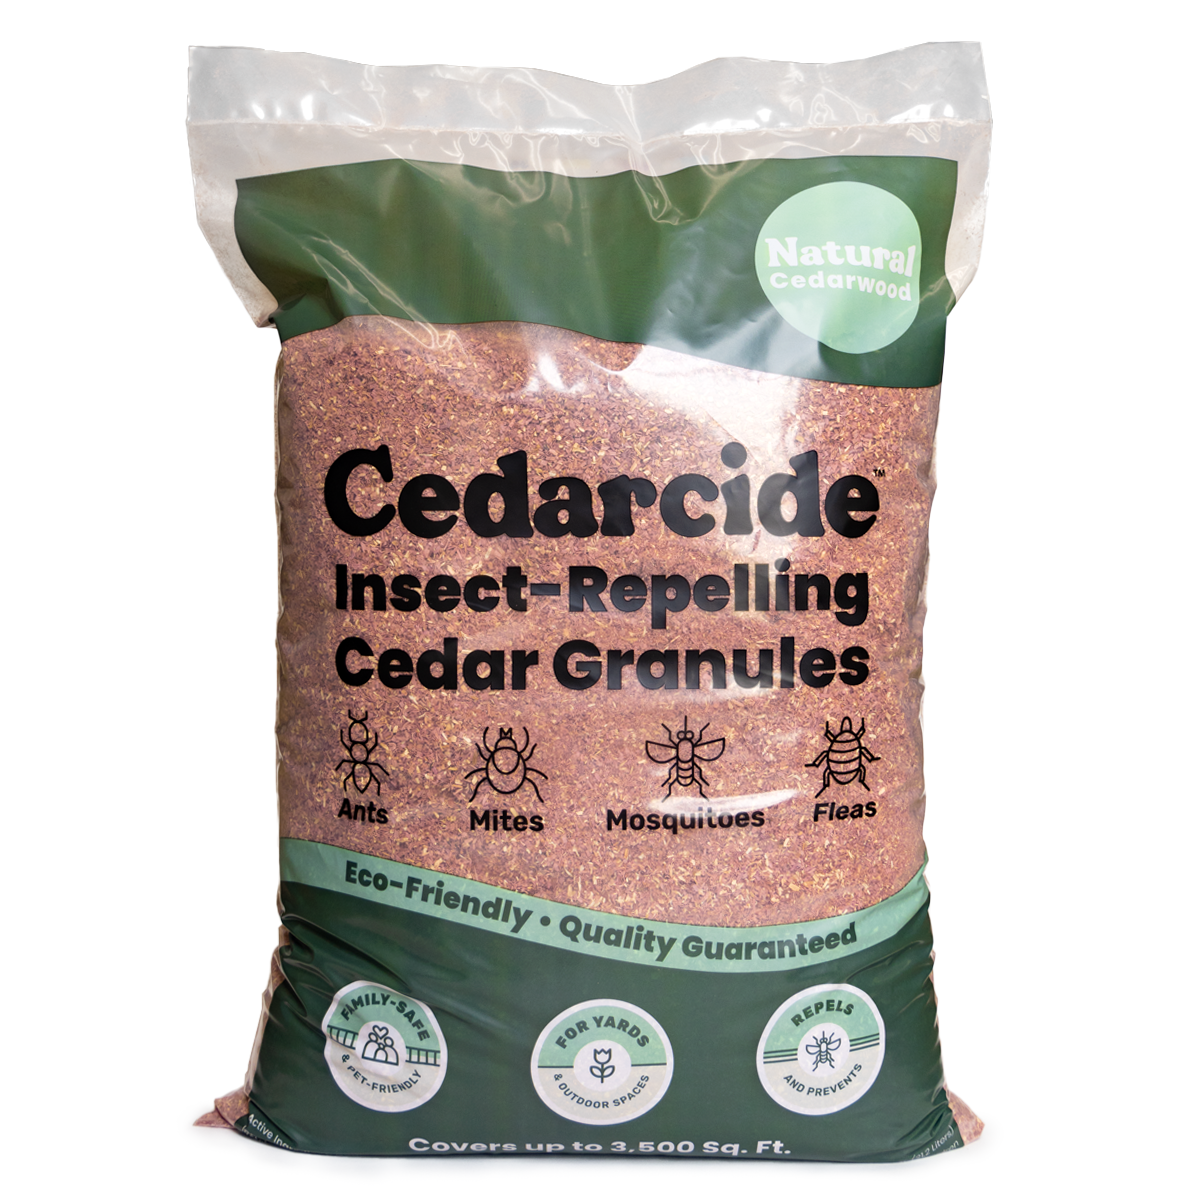 Control pests naturally with cedar